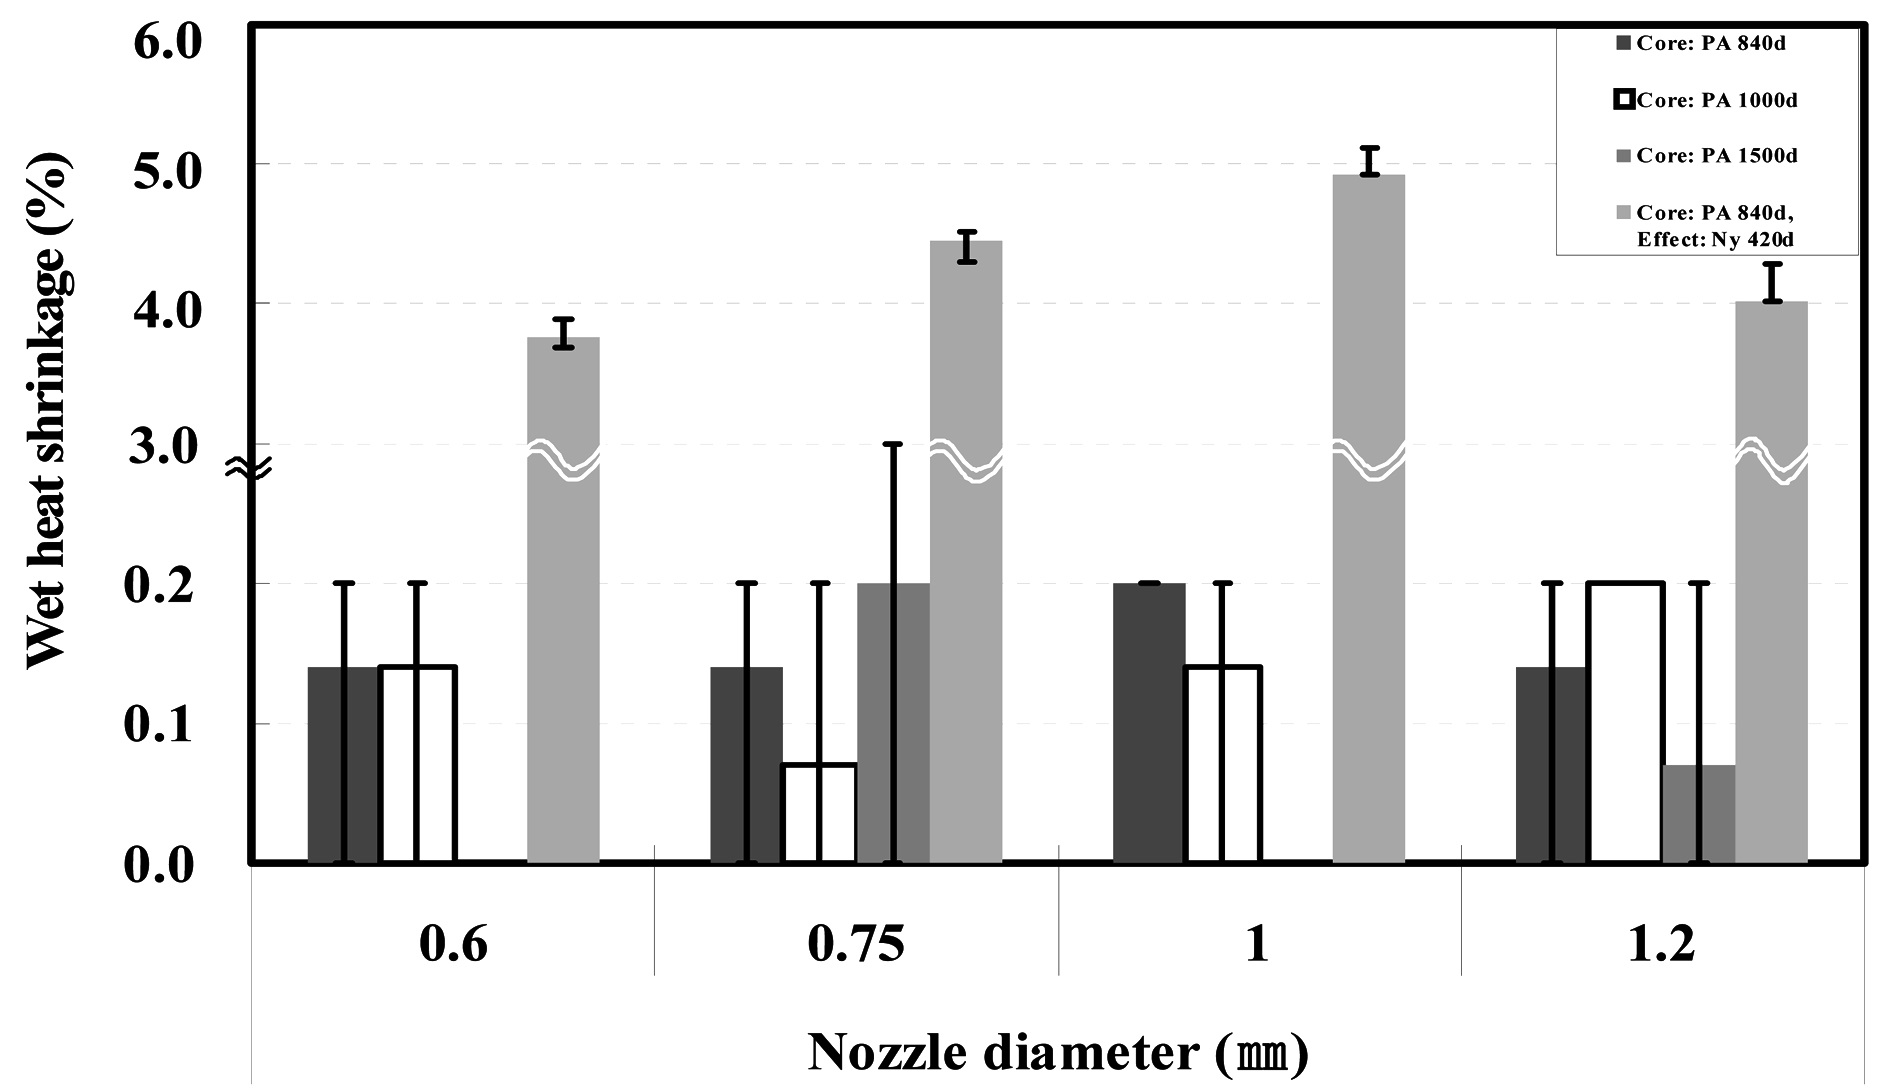 Wet heat shrinkage of specimens according to the ATY nozzle diameter.